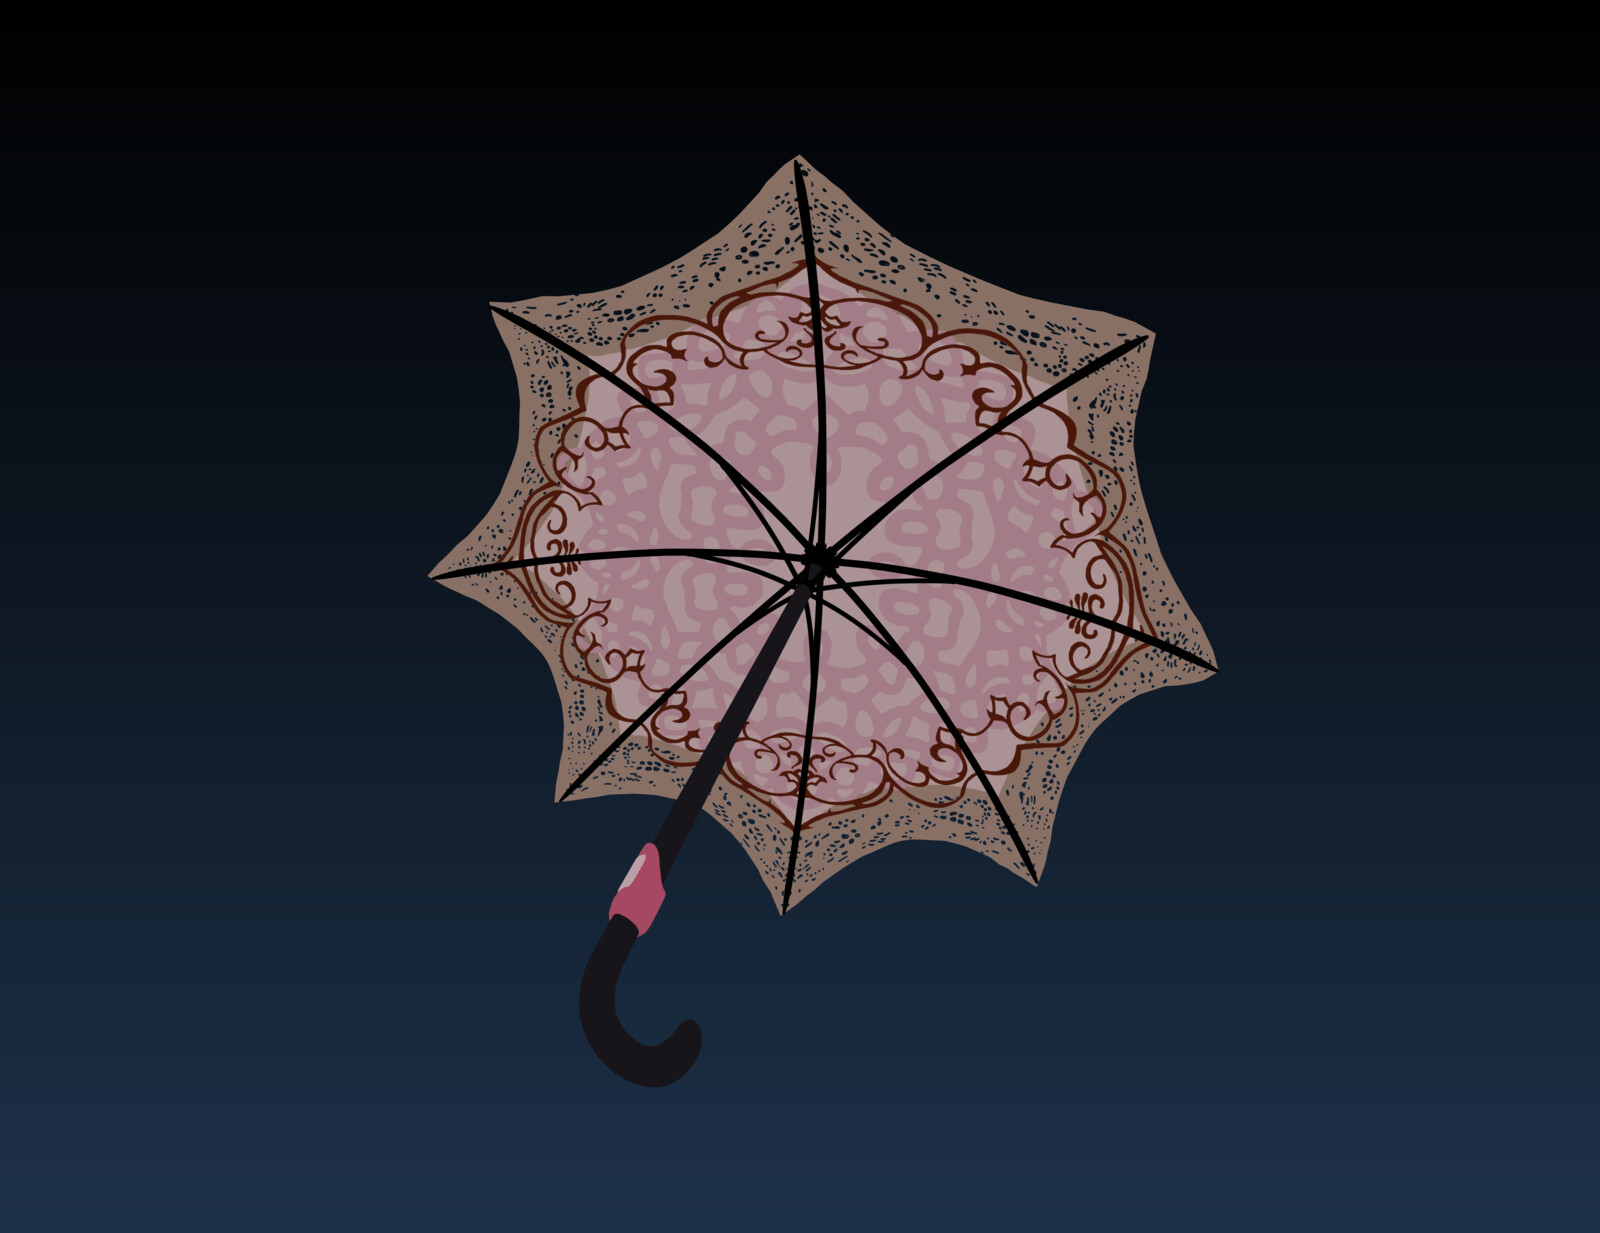 RWBY Neo's Umbrella